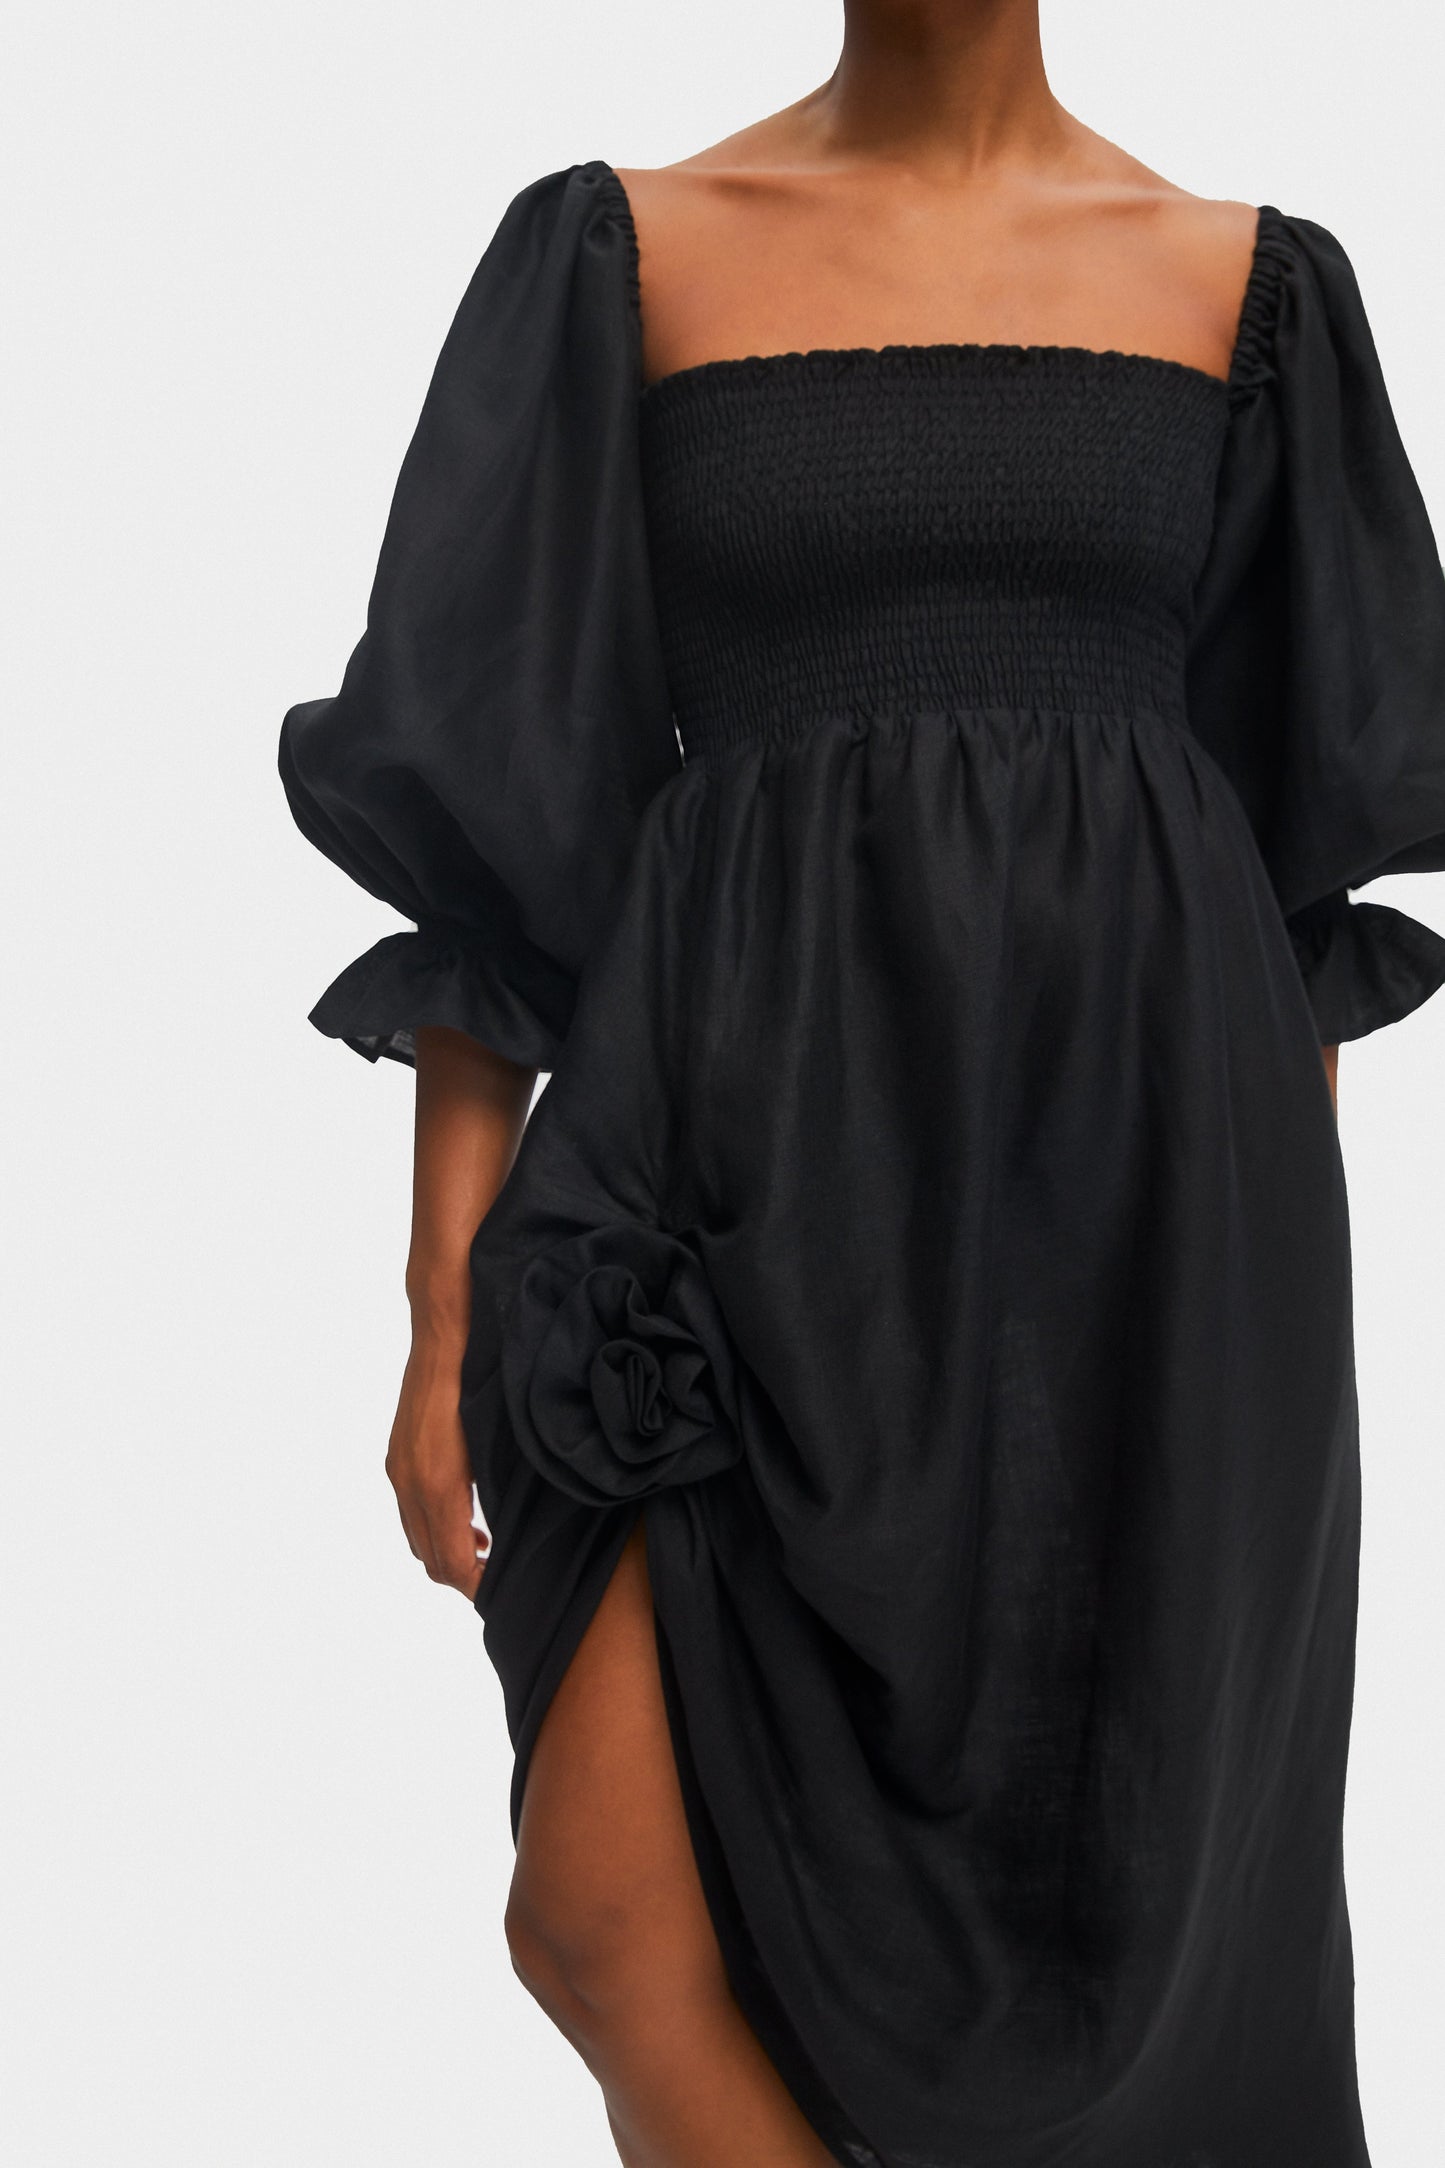 Atlanta Linen Dress with Rose Detail in Black